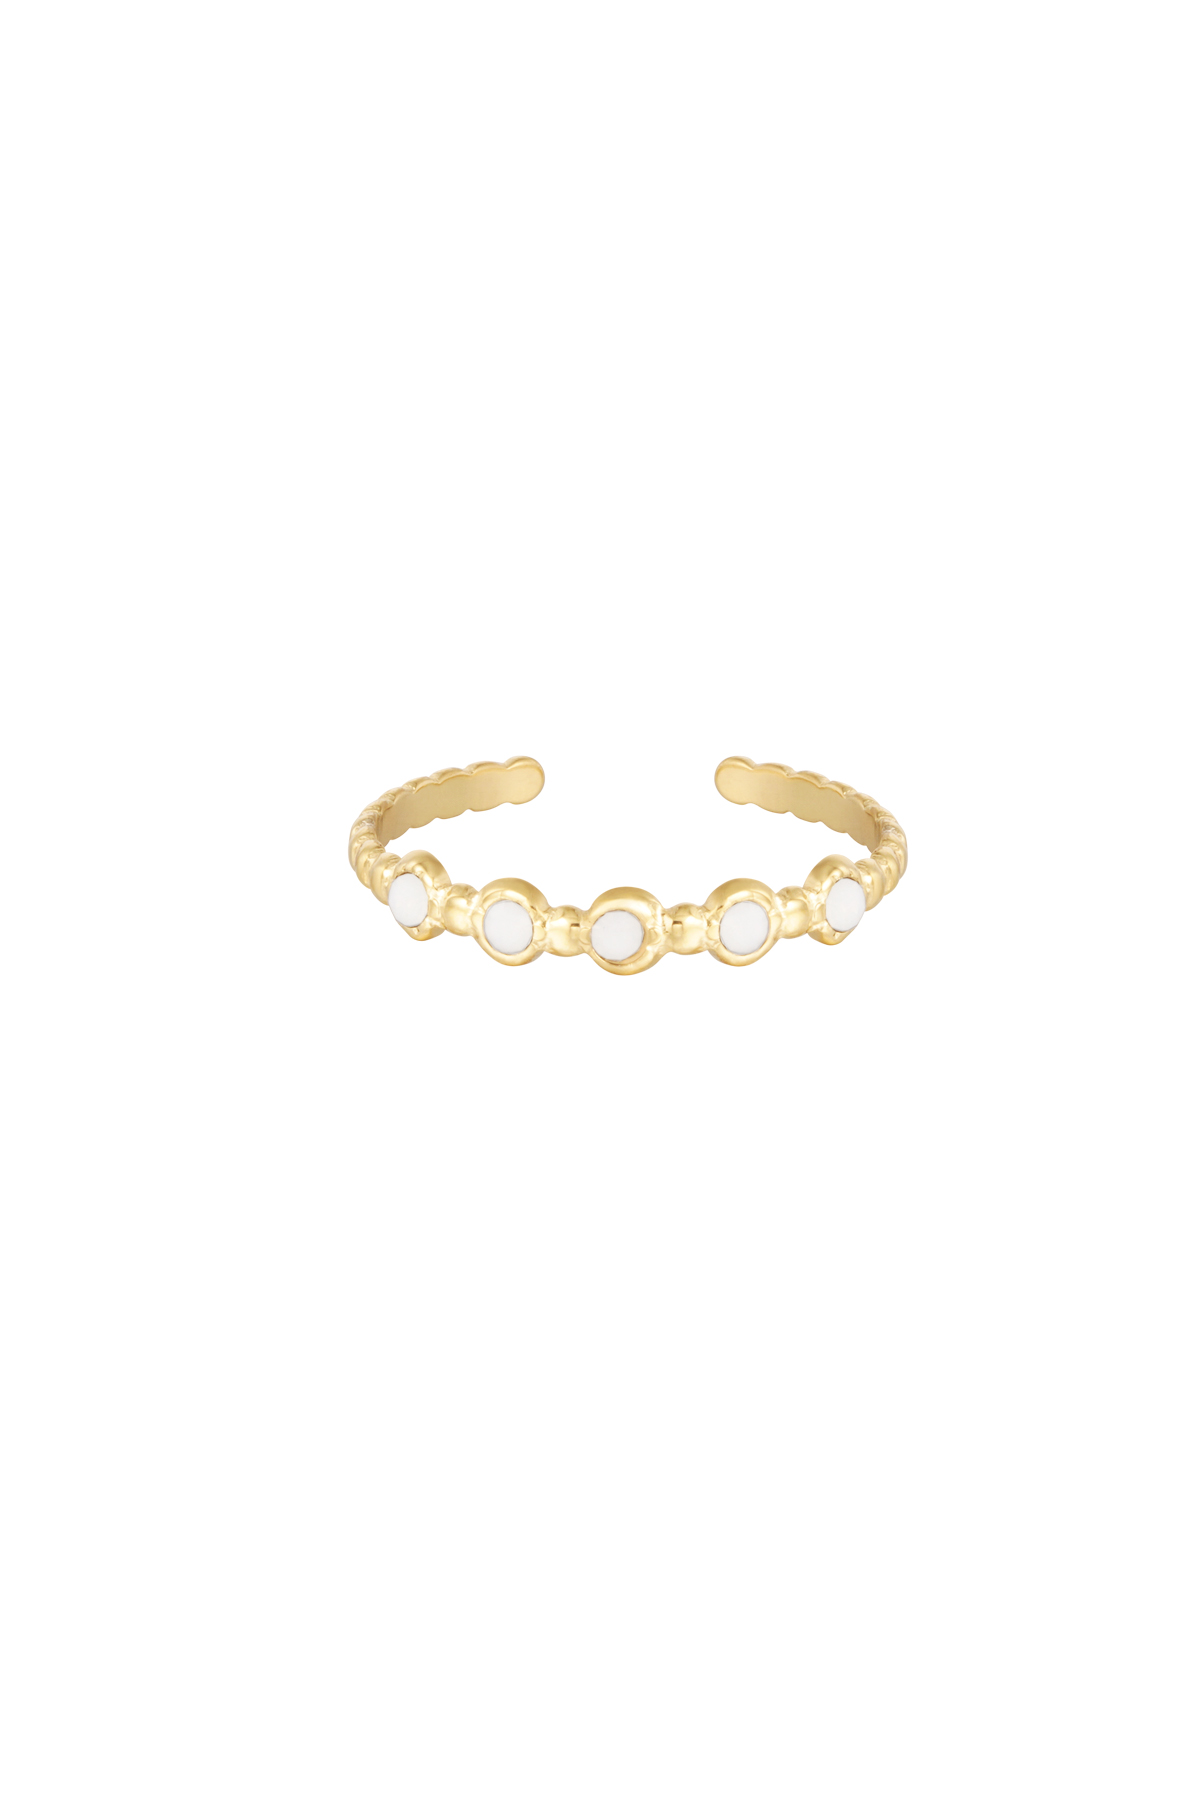 Ring stones - gold/white